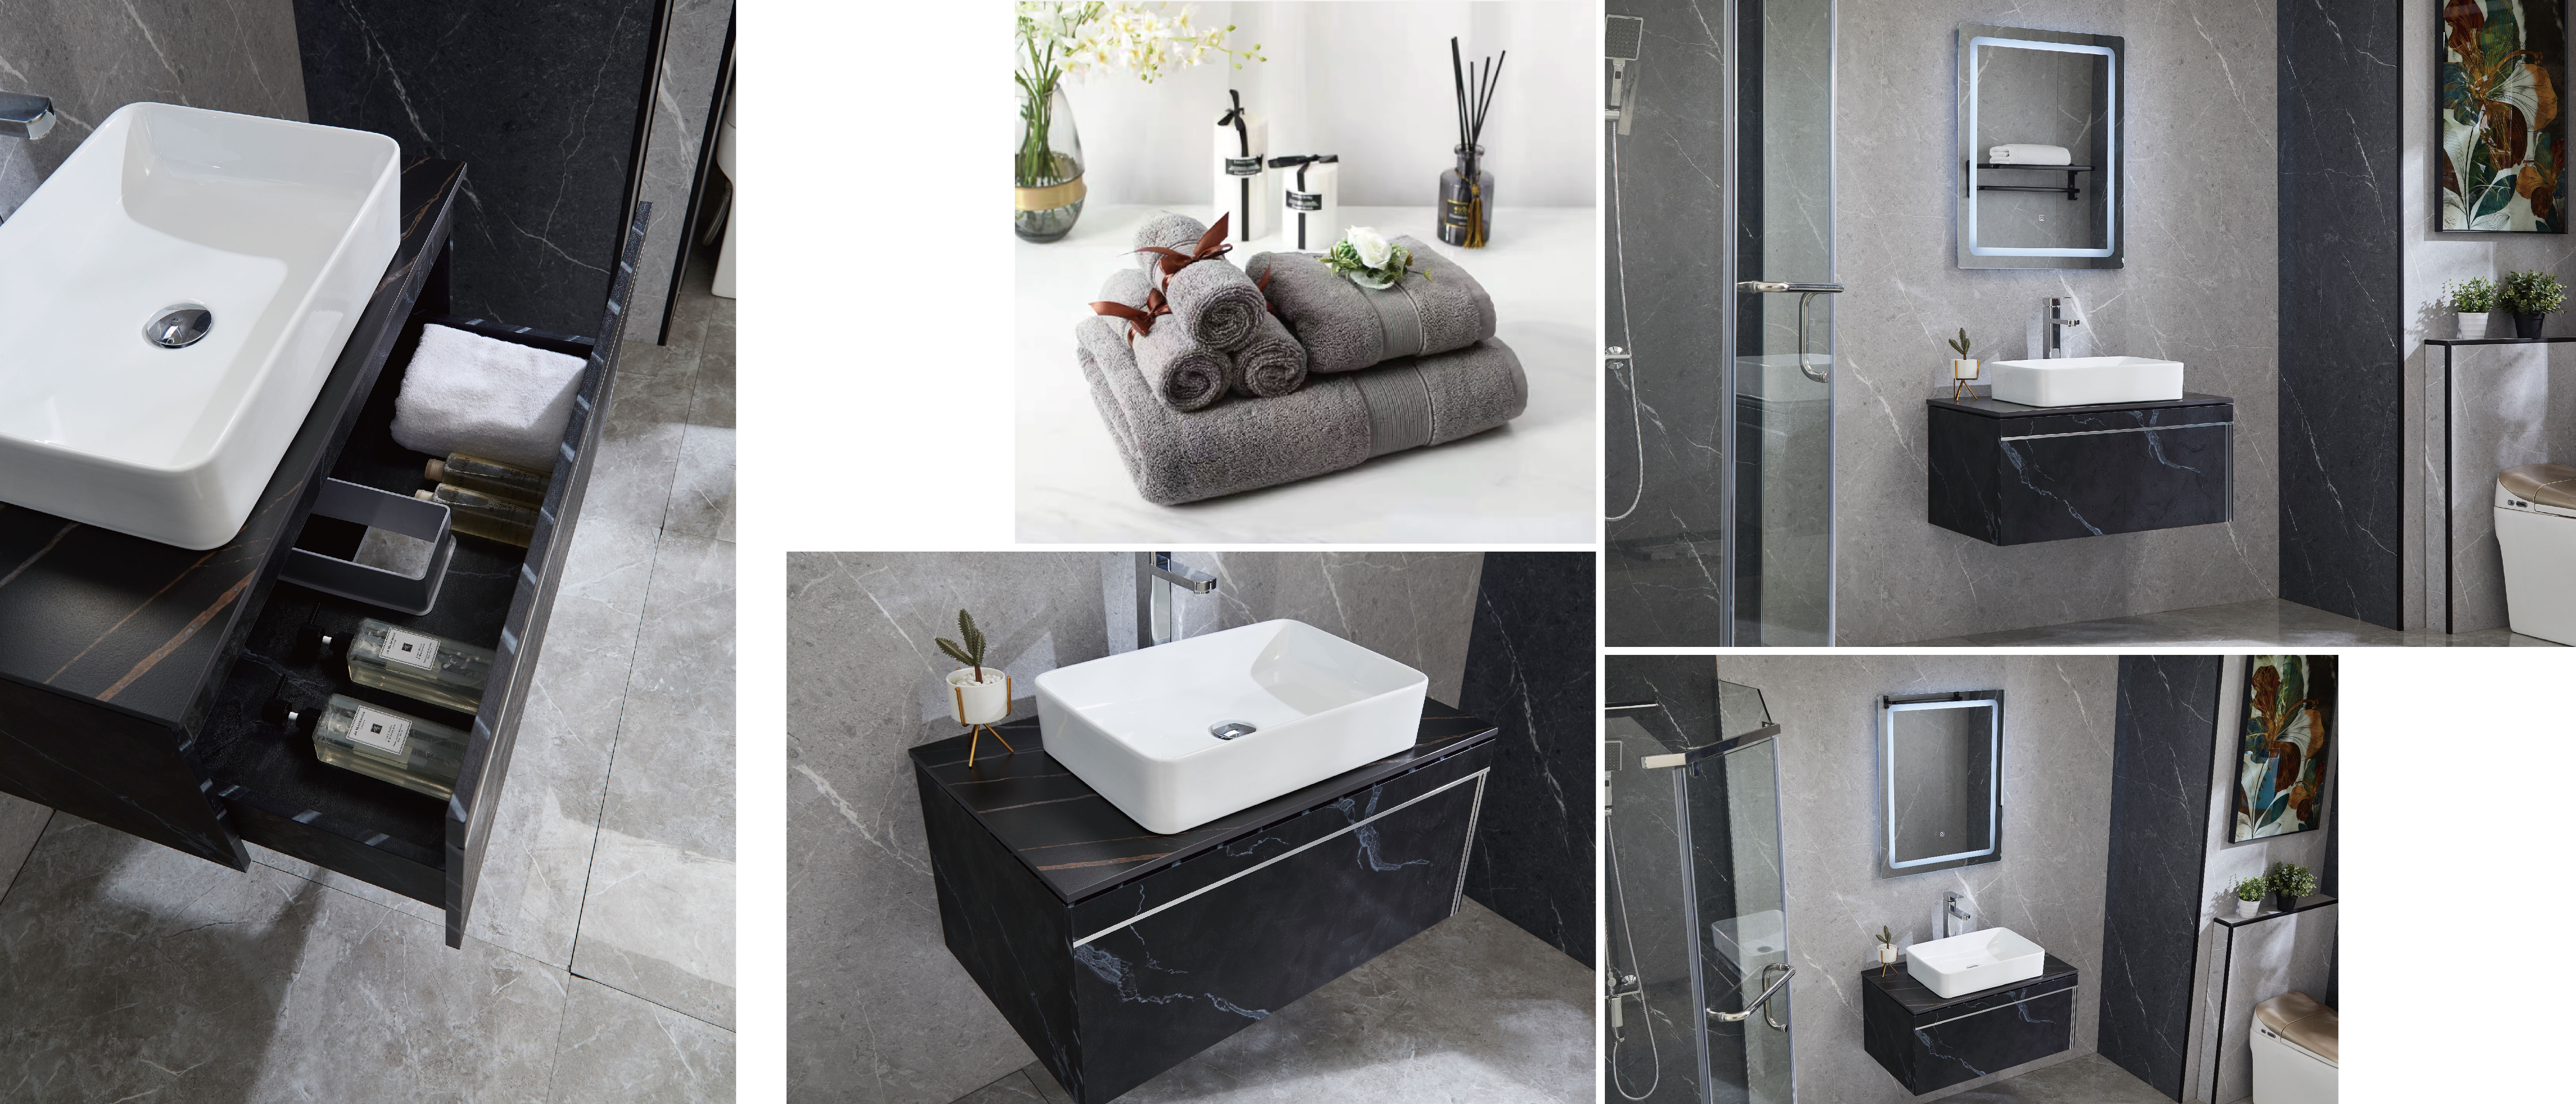 Bathroom Cabinets Vanity Wall Mounted Black Sintered Stone Top Capri 800mm